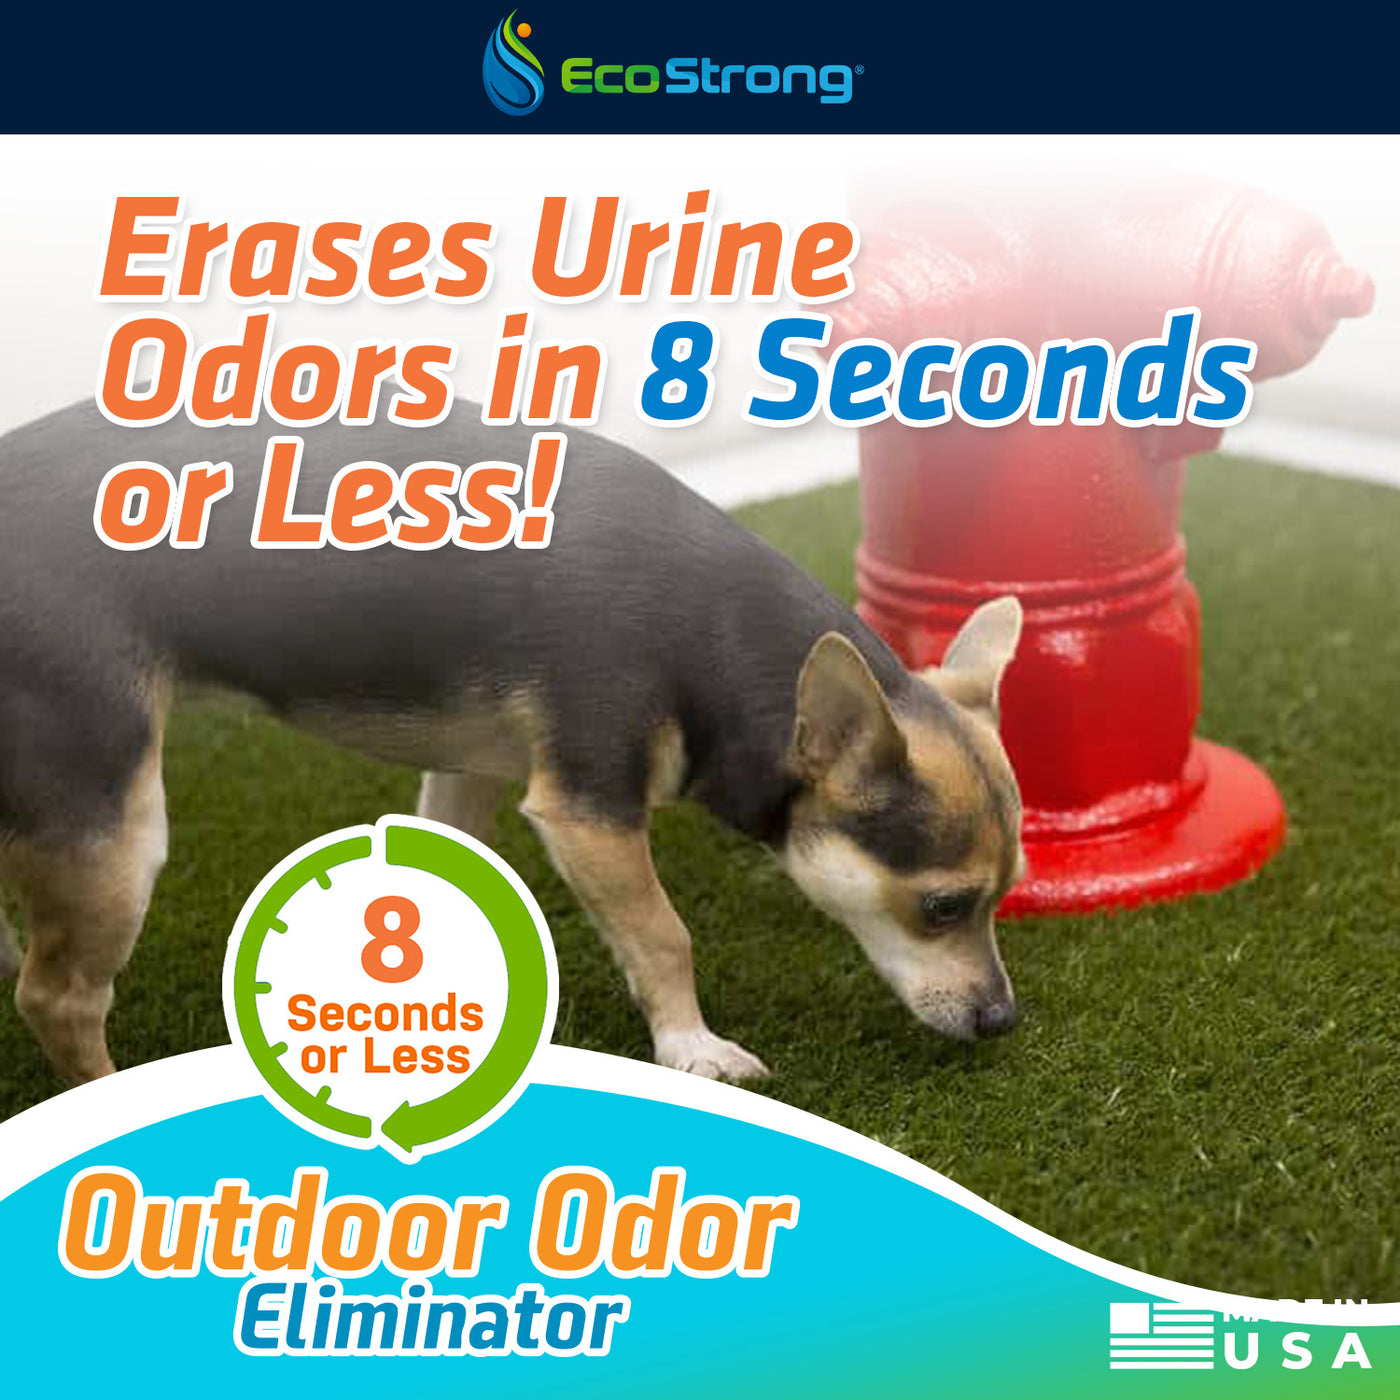 EcoStrong Outdoor Odor Eliminator Spot treatment #size_10-x-2-oz-shots-and-sprayer-bottle